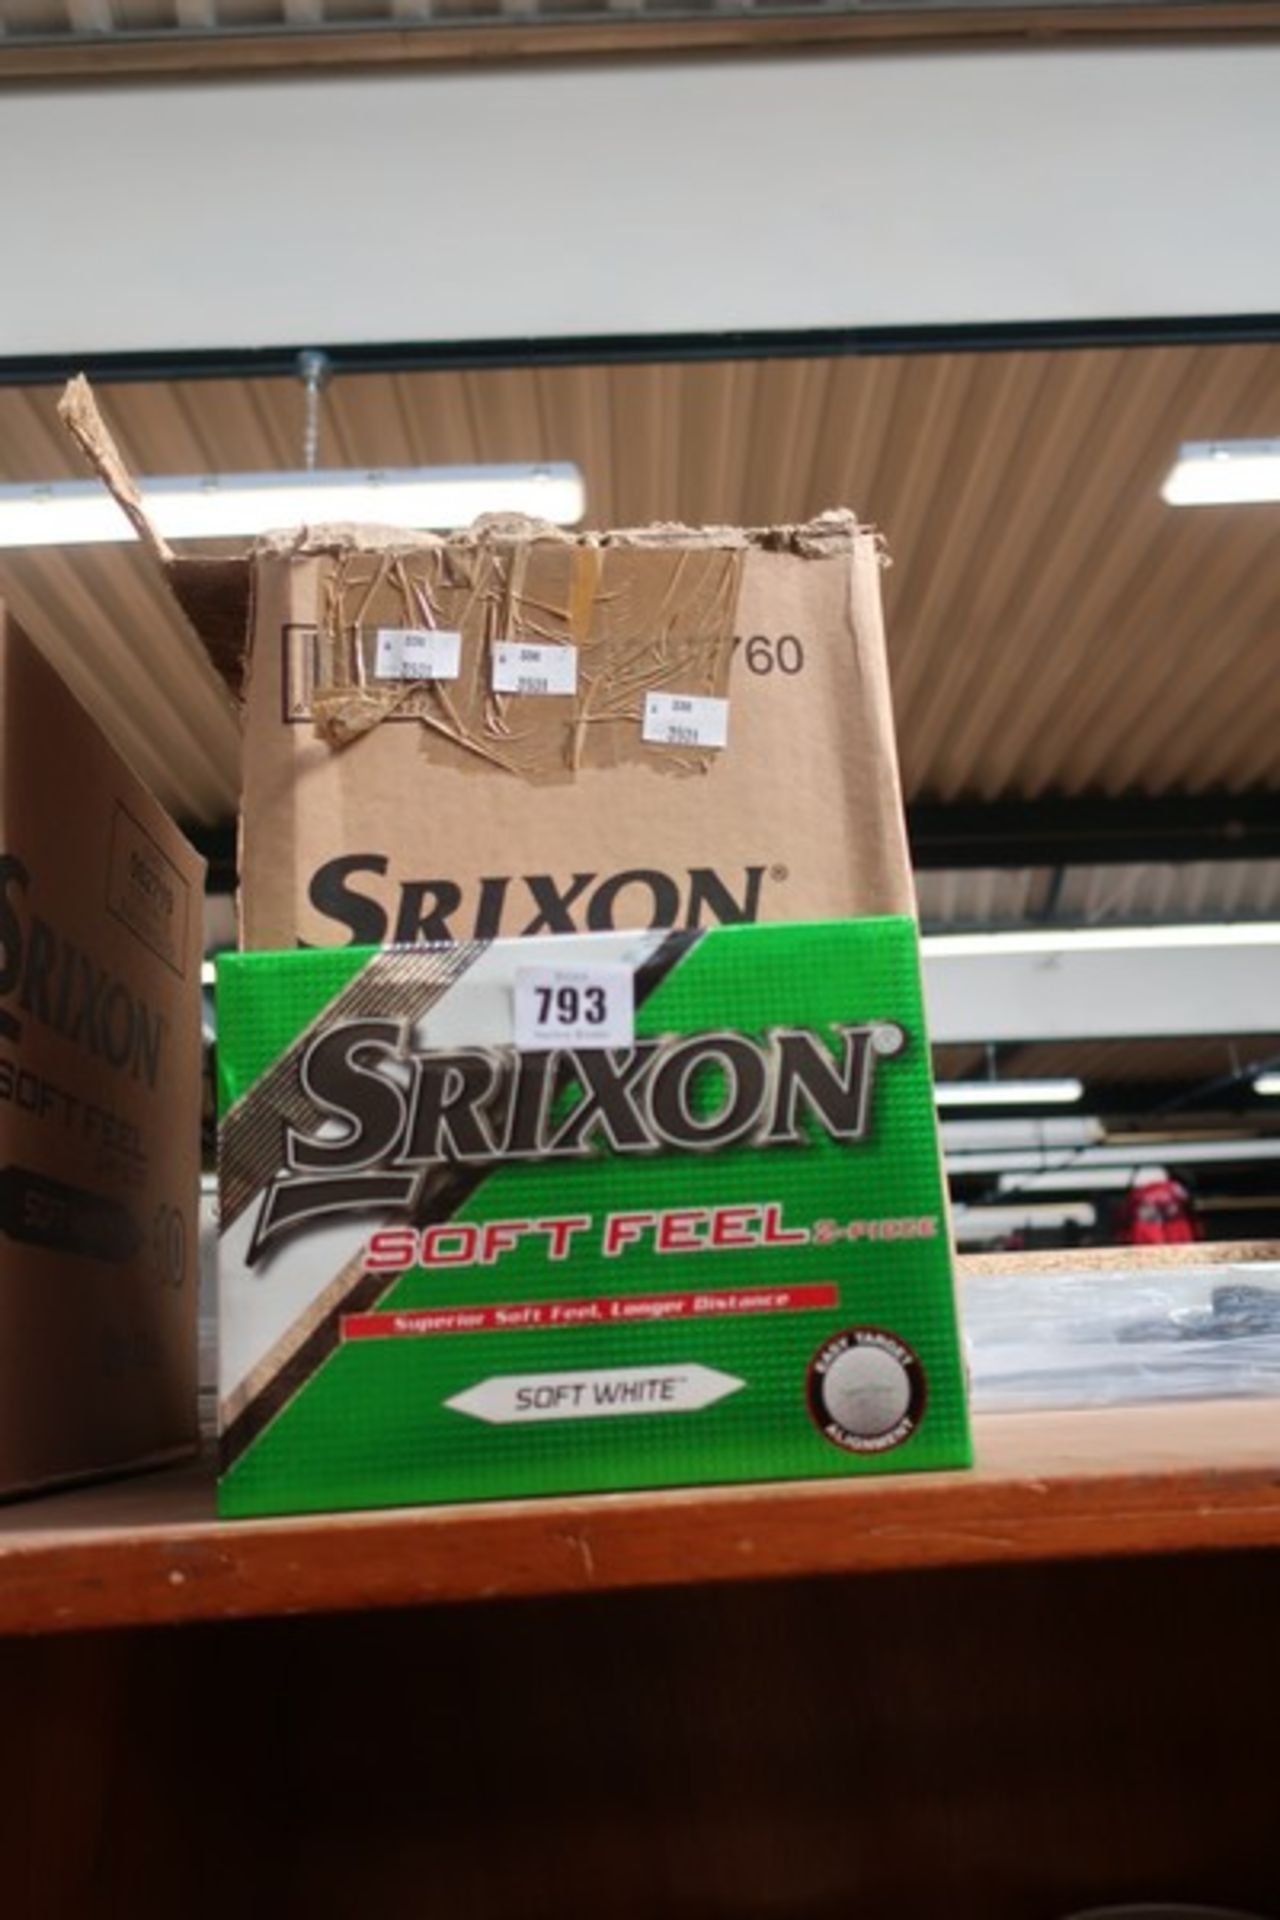 Thirteen packs of Sripxon Soft Feel soft white golf balls (12 balls per pack).